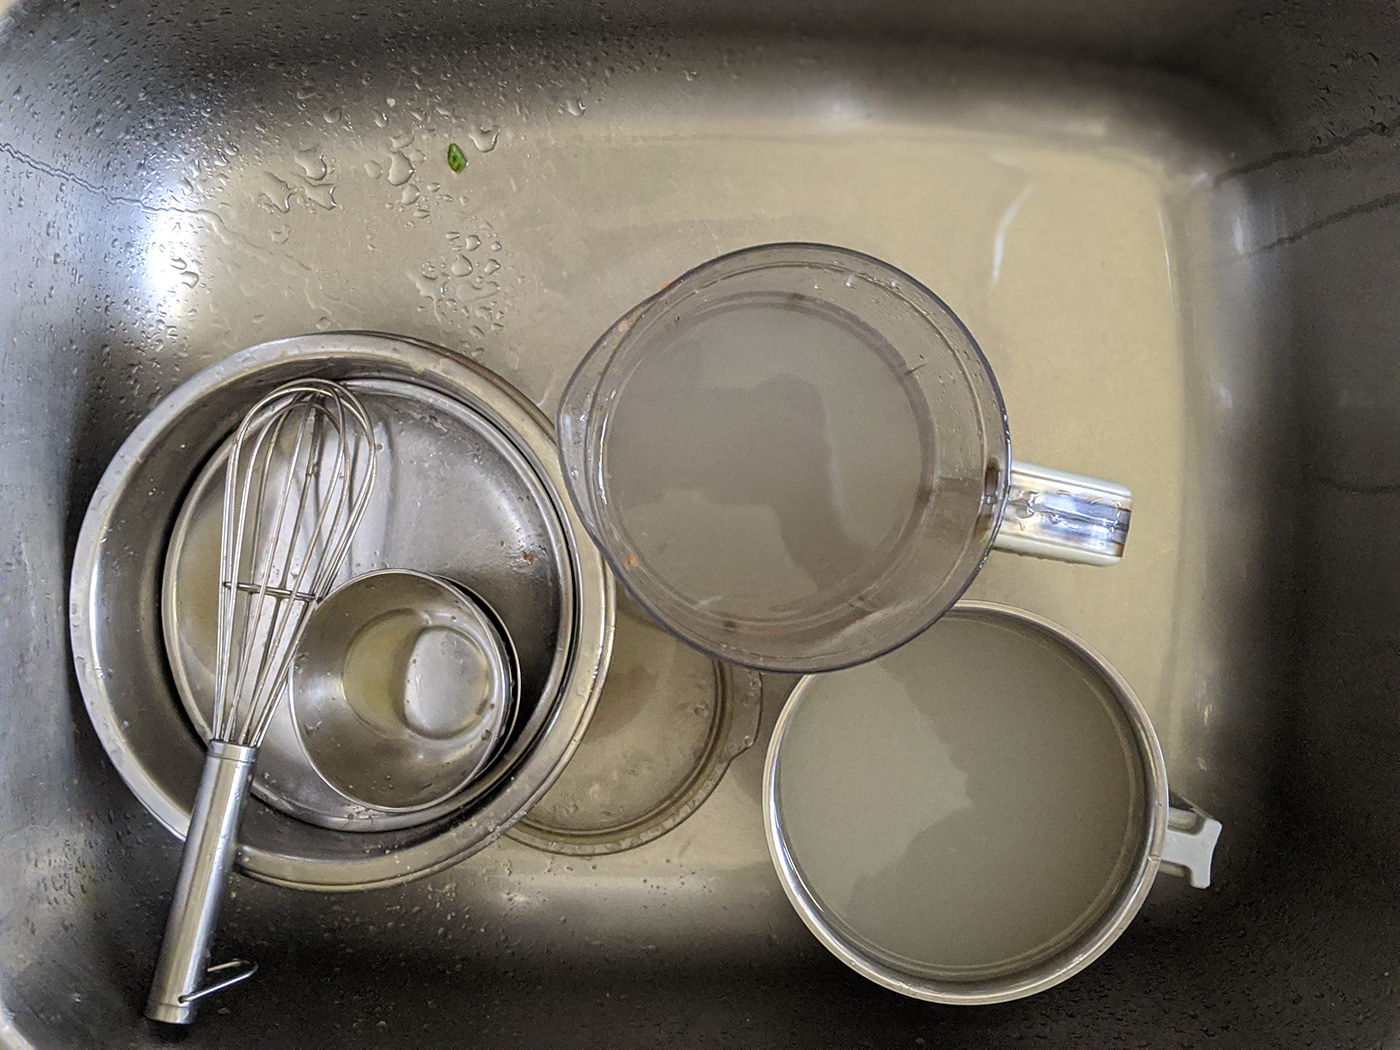 Basin dishes lockdown2020 pandemic Quarantine utensils